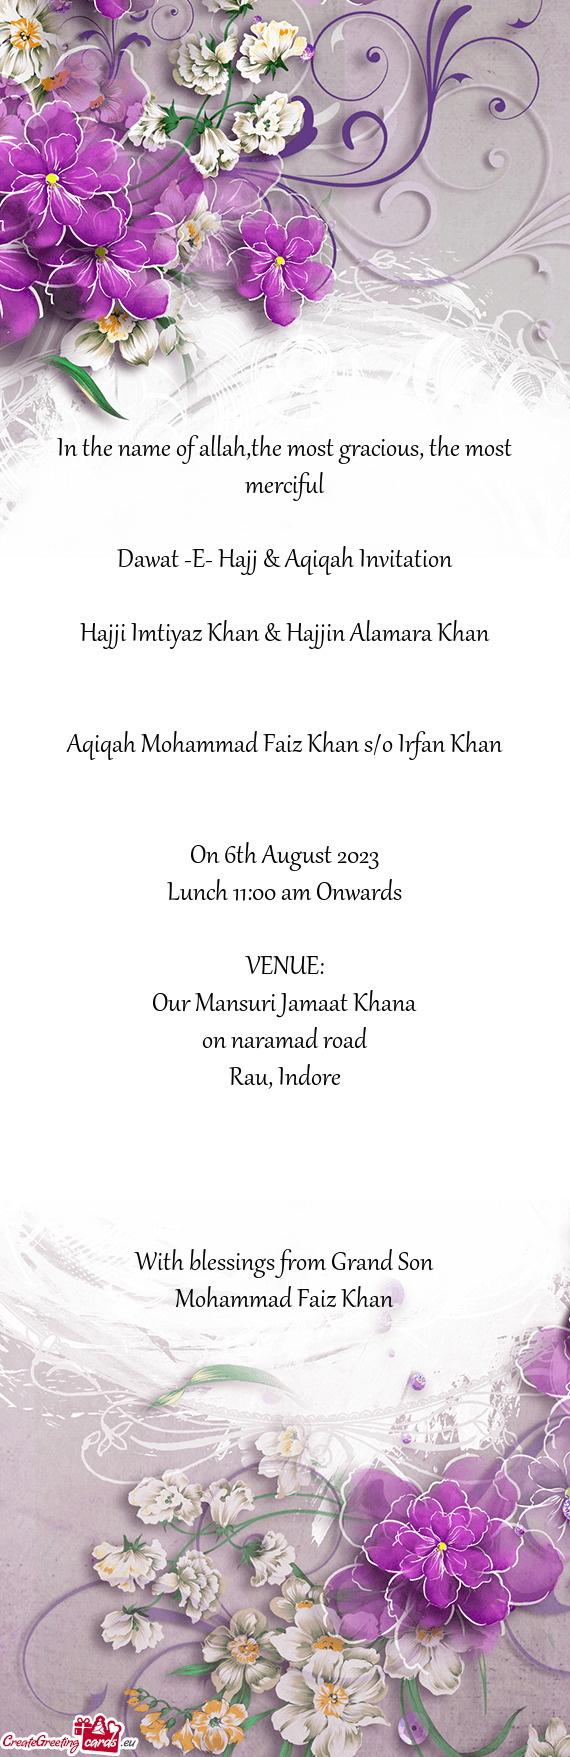 Aqiqah Mohammad Faiz Khan s/o Irfan Khan